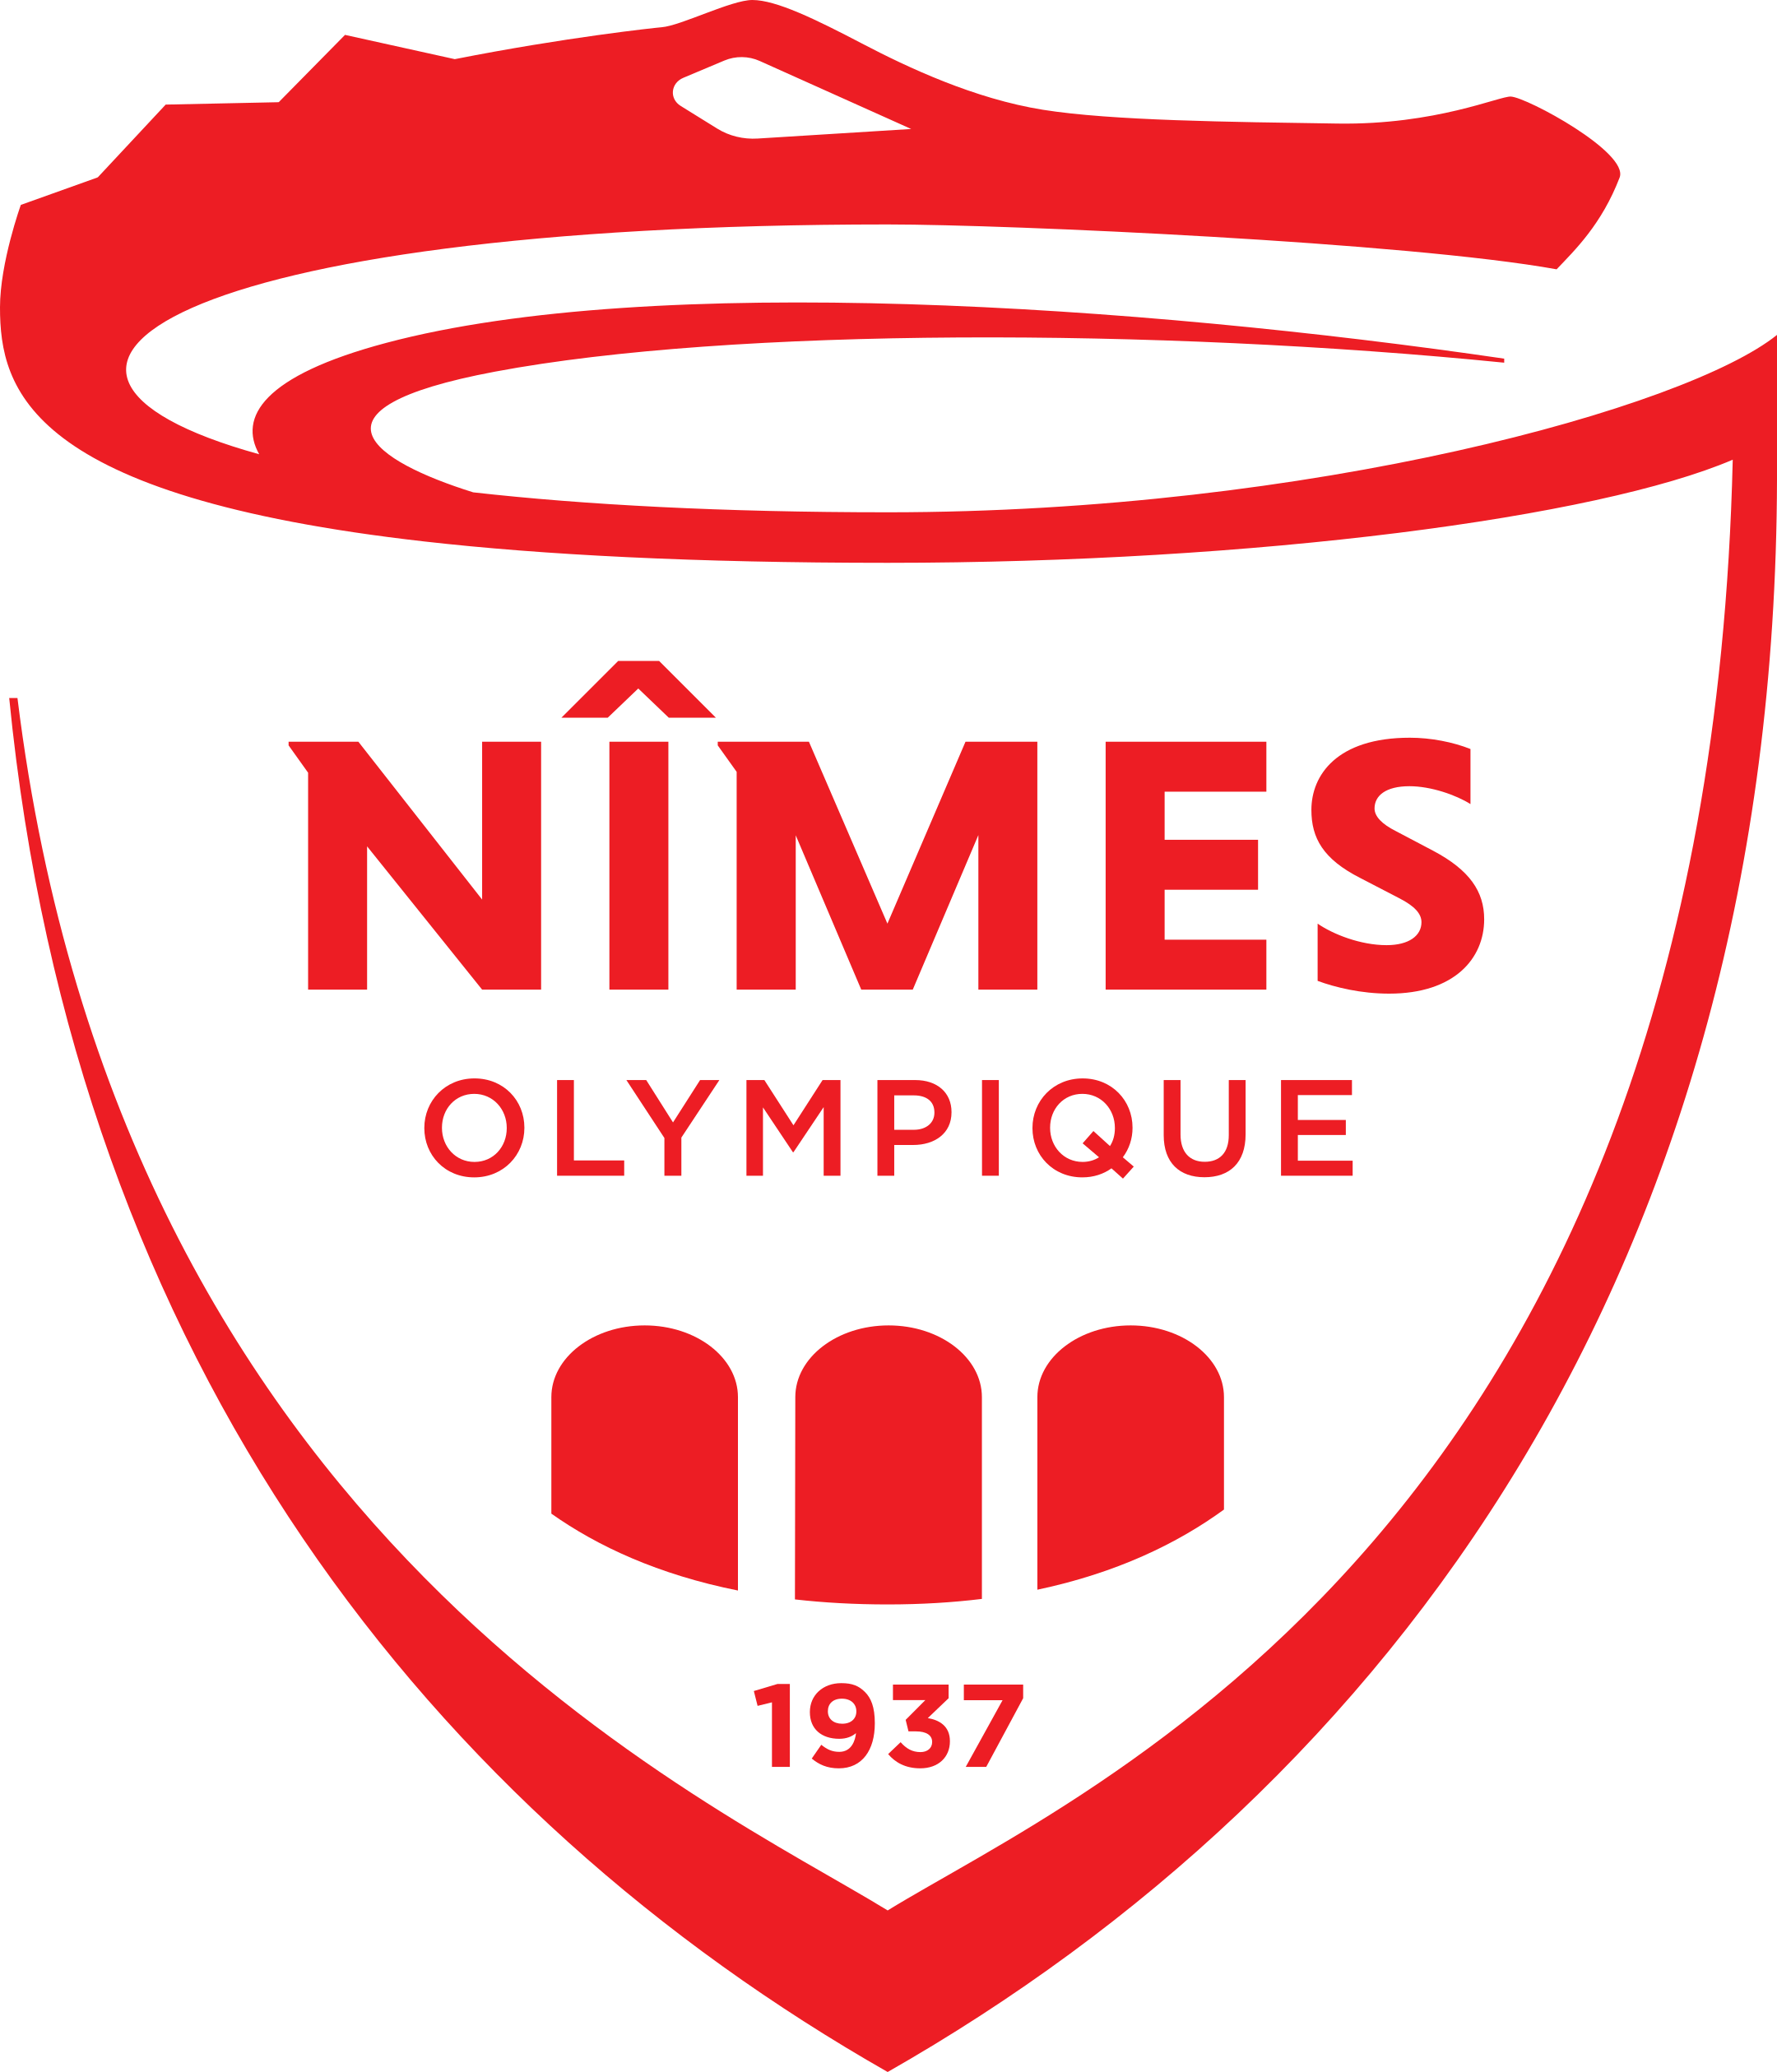 nimes olympique logo 1 - Nîmes Olympique Logo